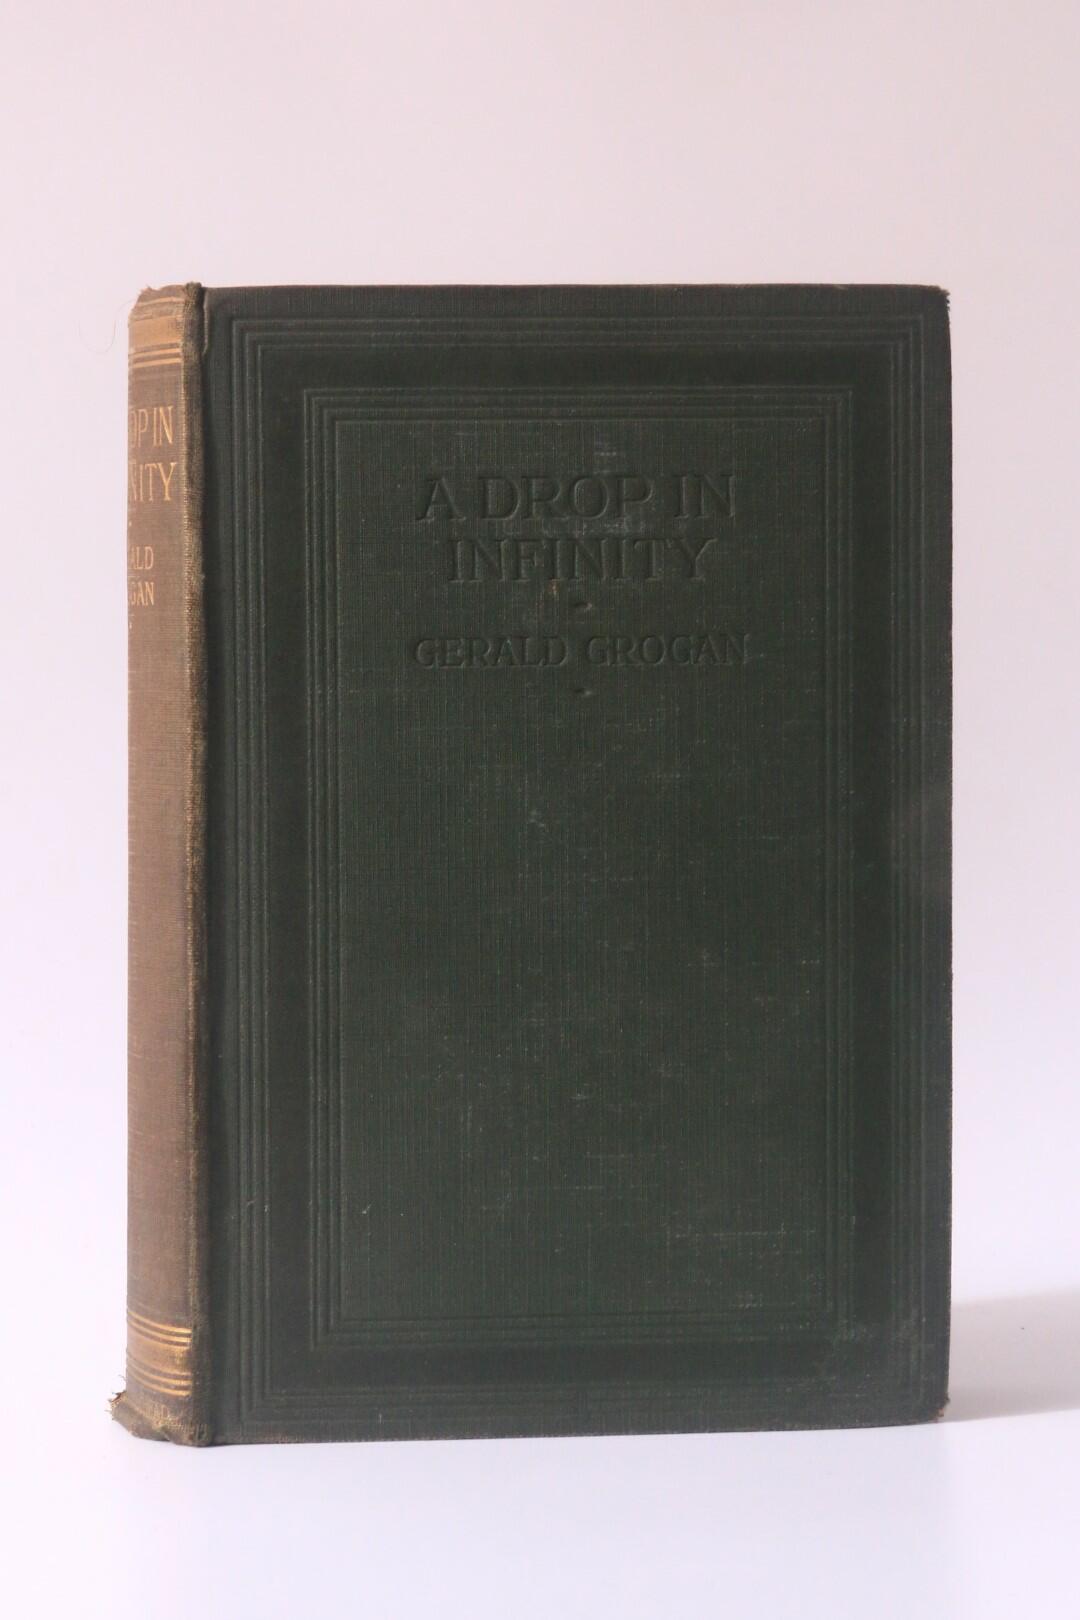 Gerald Grogan - A Drop in Infinity - John Lane / Bodley Head, 1915, Signed First Edition.